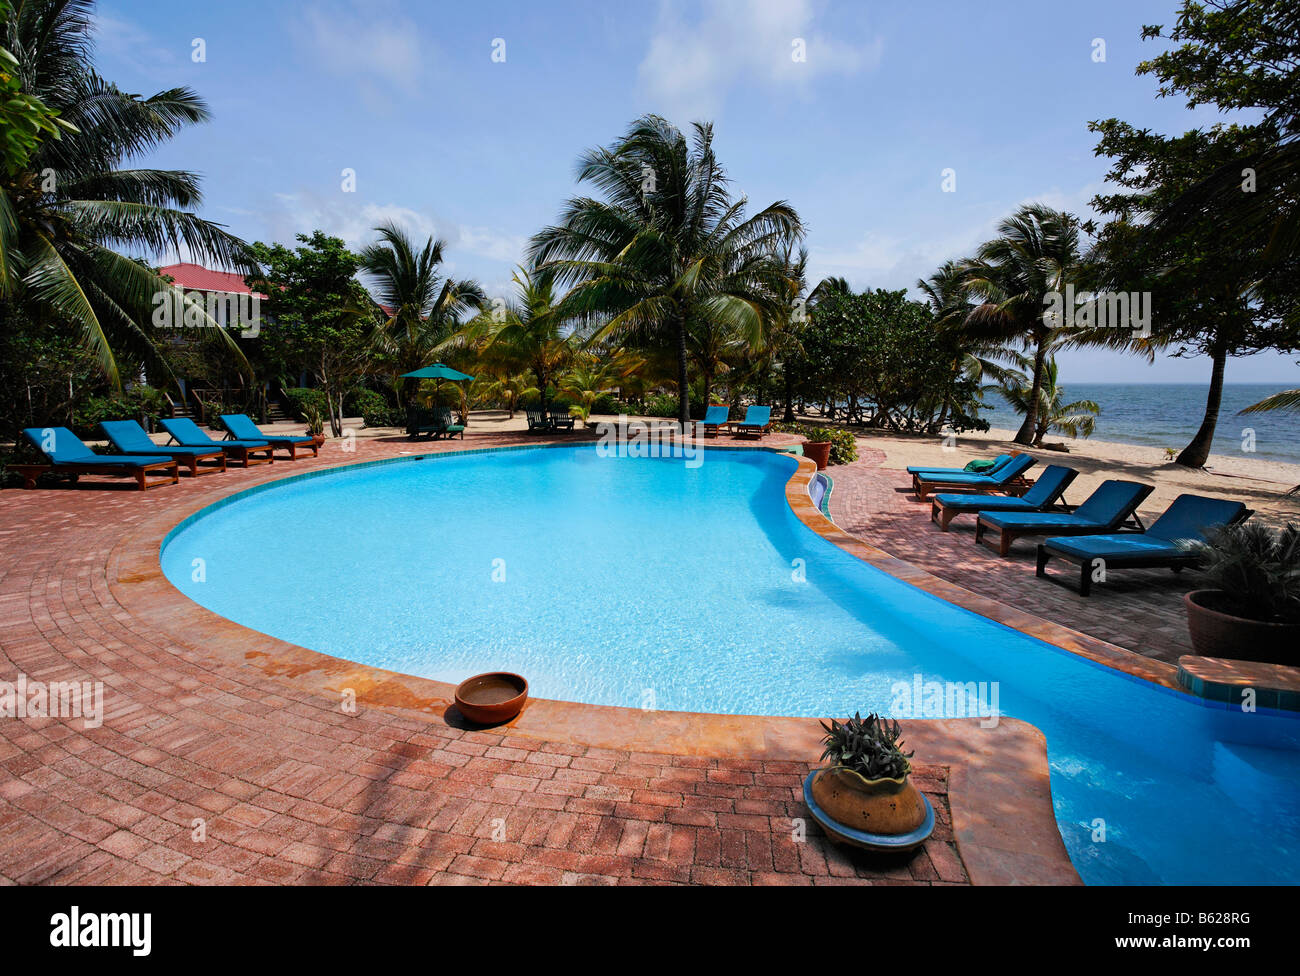 Deckchairs alongside a swimming pool, Hamanasi Hotel, Hopkins, Dangria, Belize, Central America, Caribbean Stock Photo